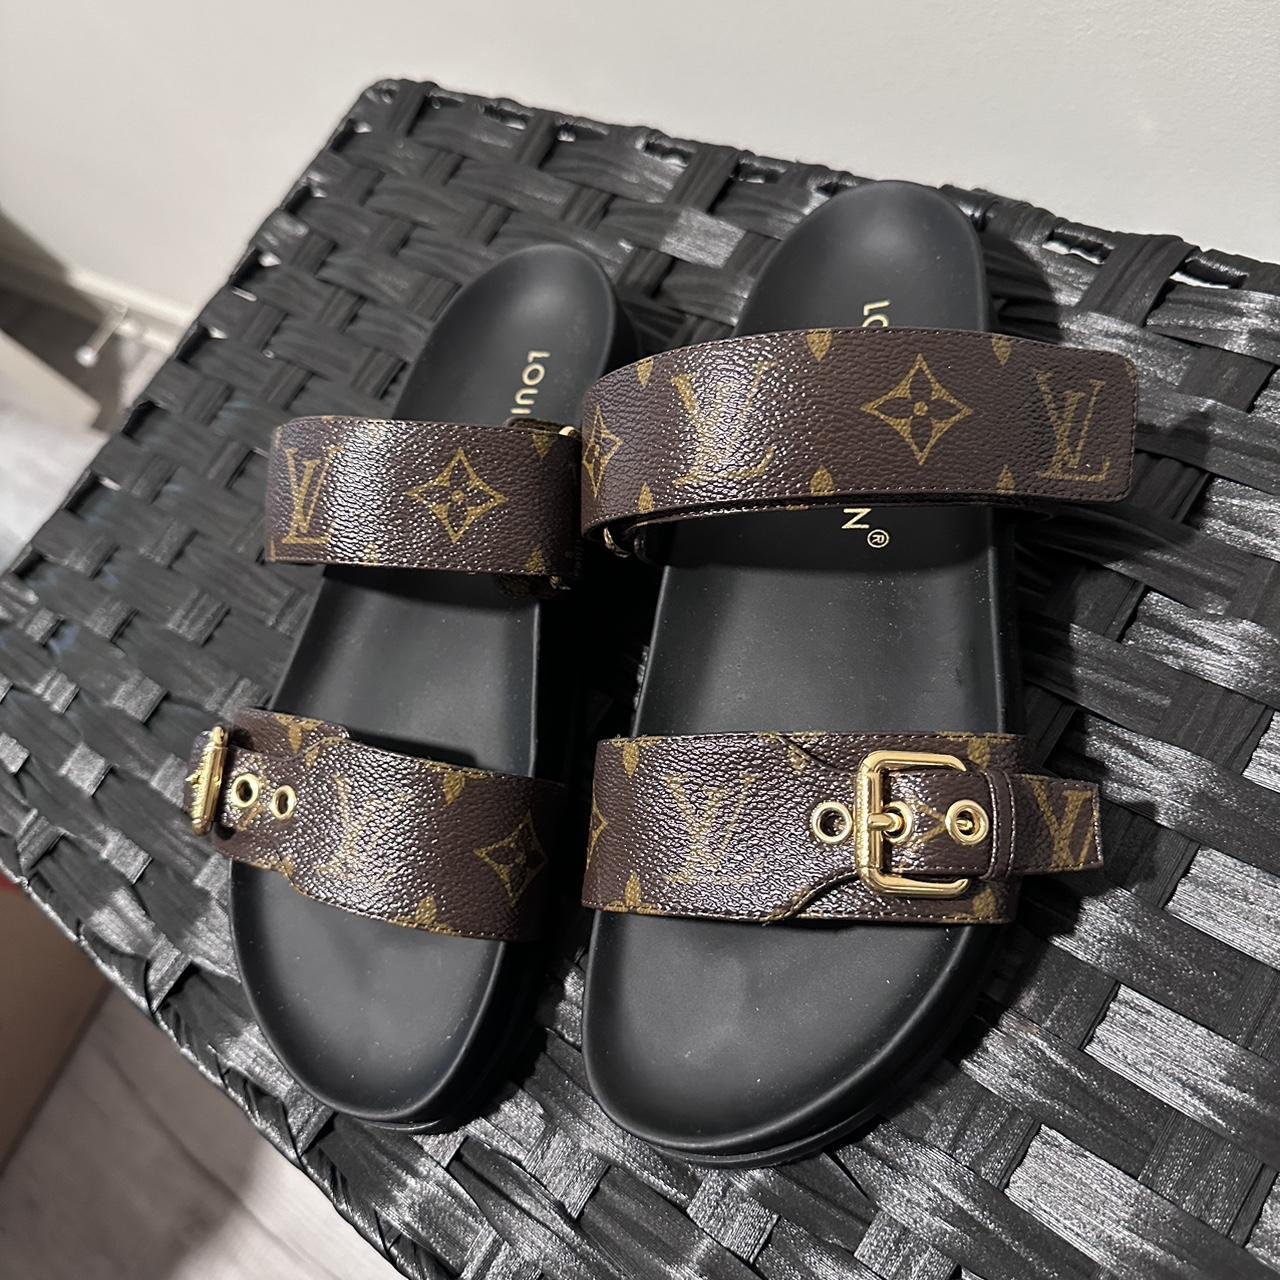 Louis Vuitton Sandals also known as (bom dia flat) - Depop